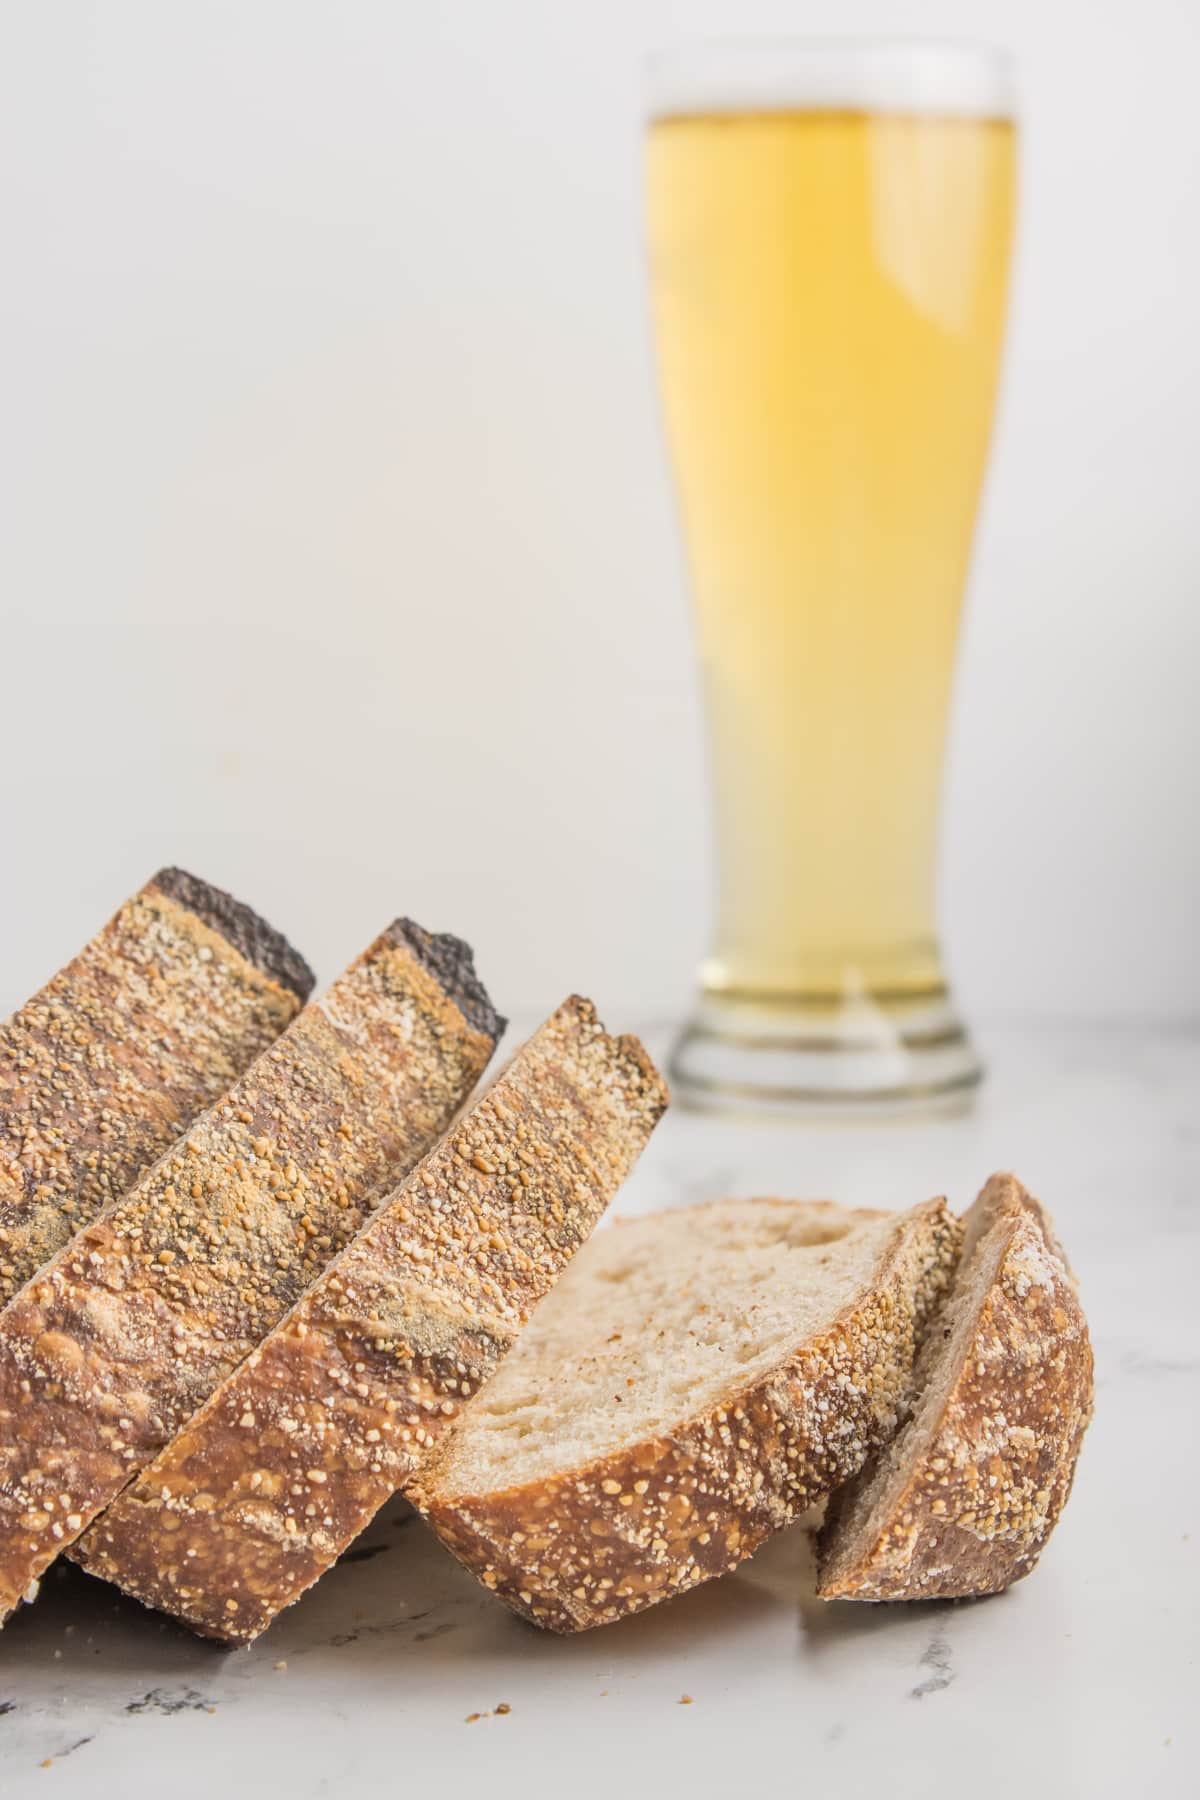 Sourdough Beer Bread